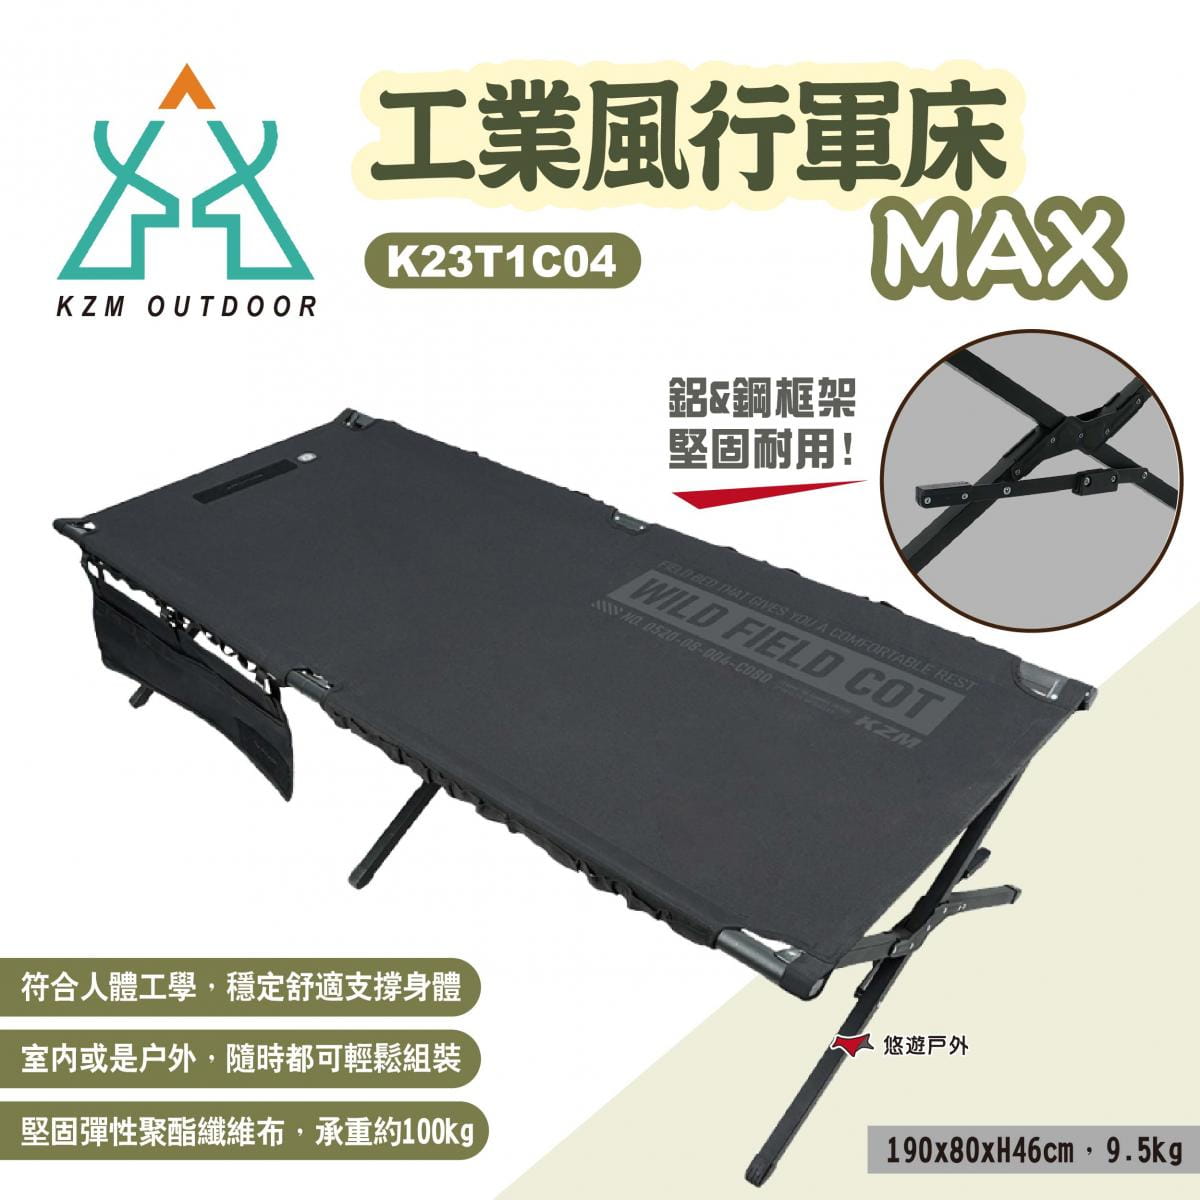 【KZM】工業風行軍床MAX K23T1C04 悠遊戶外 1